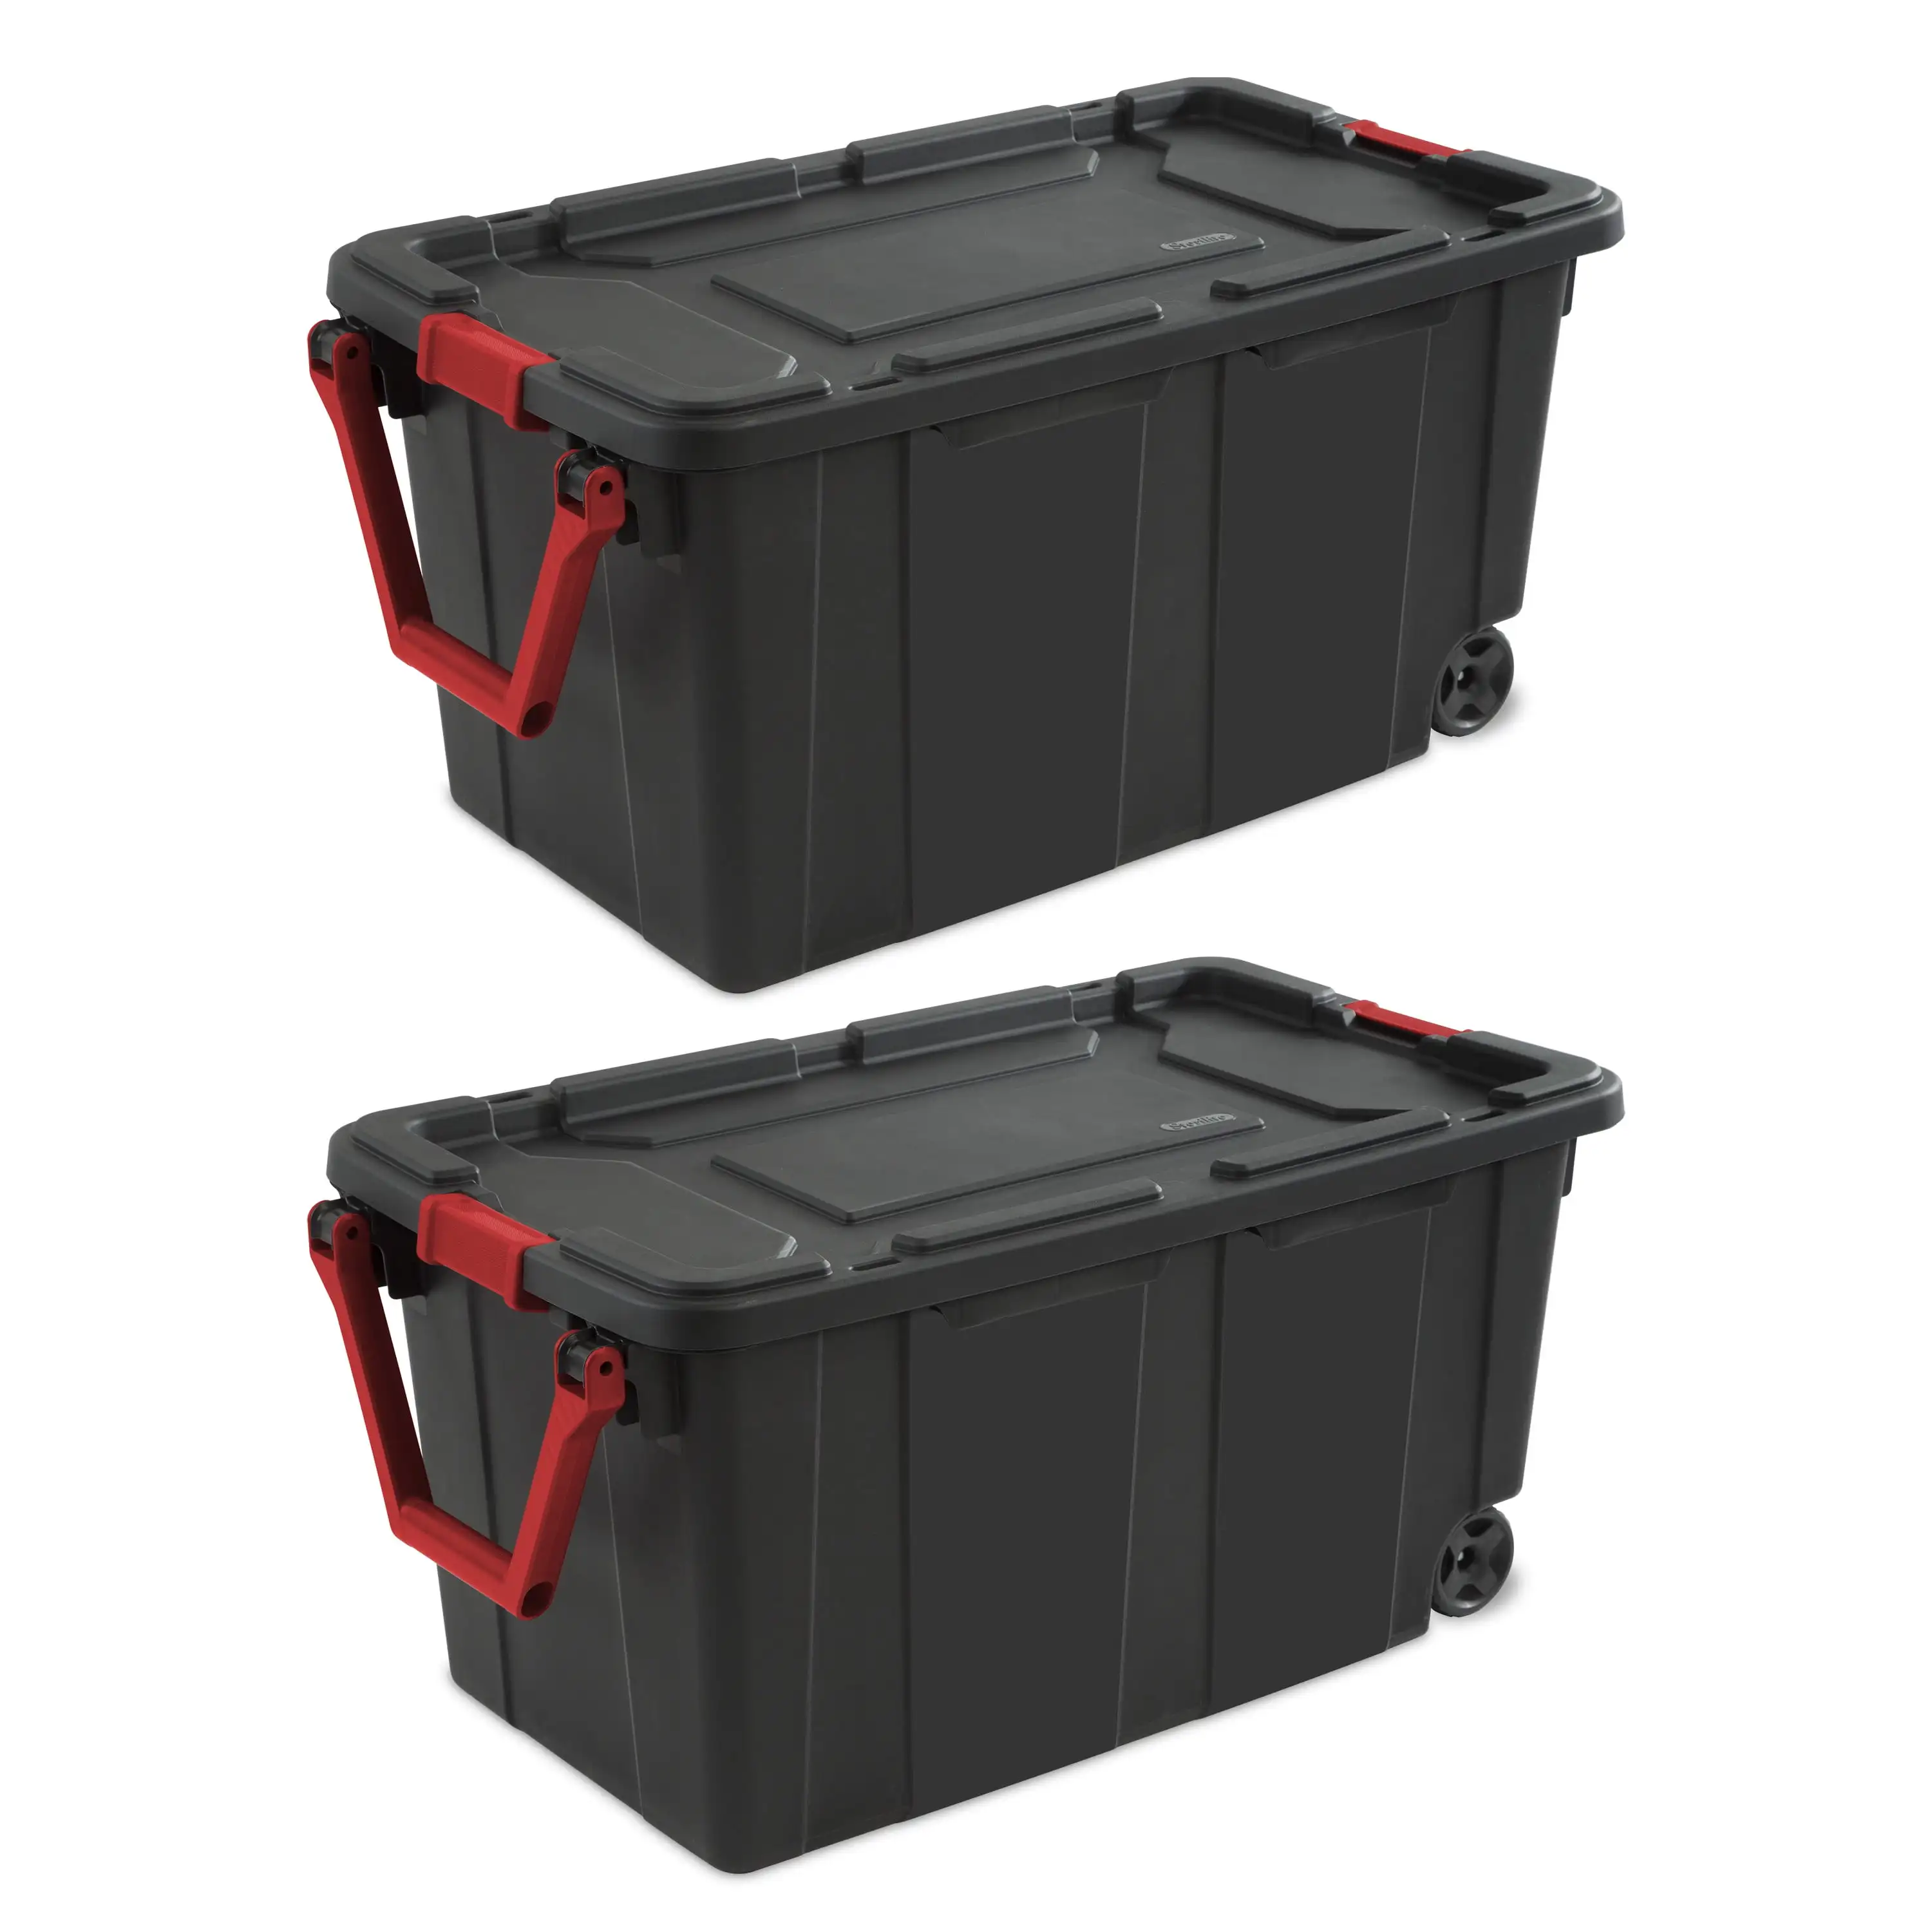 

Sterilite 40 Gallon Wheeled Industrial Tote Plastic Bins Wheeled Large Storage Box Set, Black, Set of 2